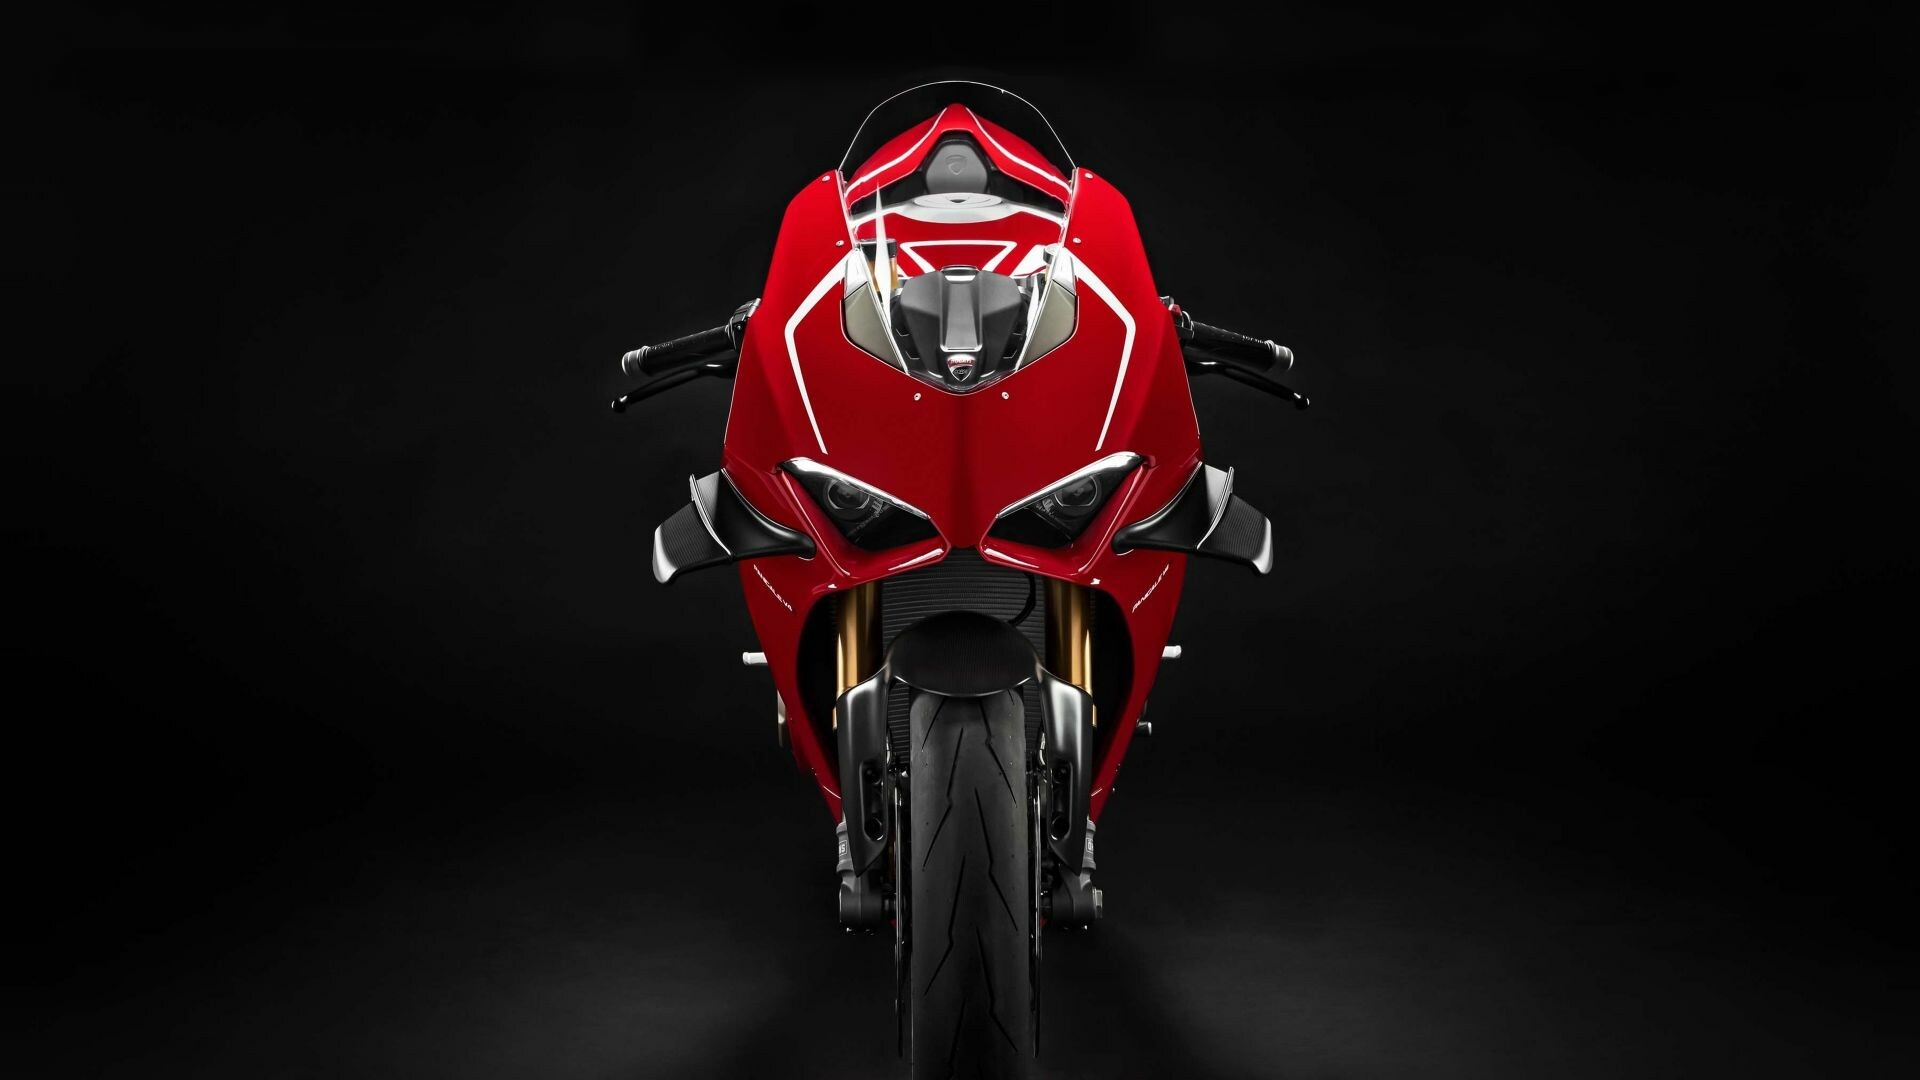 Ducati: Panigale V4 R, Italian sports bike, Superbike racing. 1920x1080 Full HD Wallpaper.